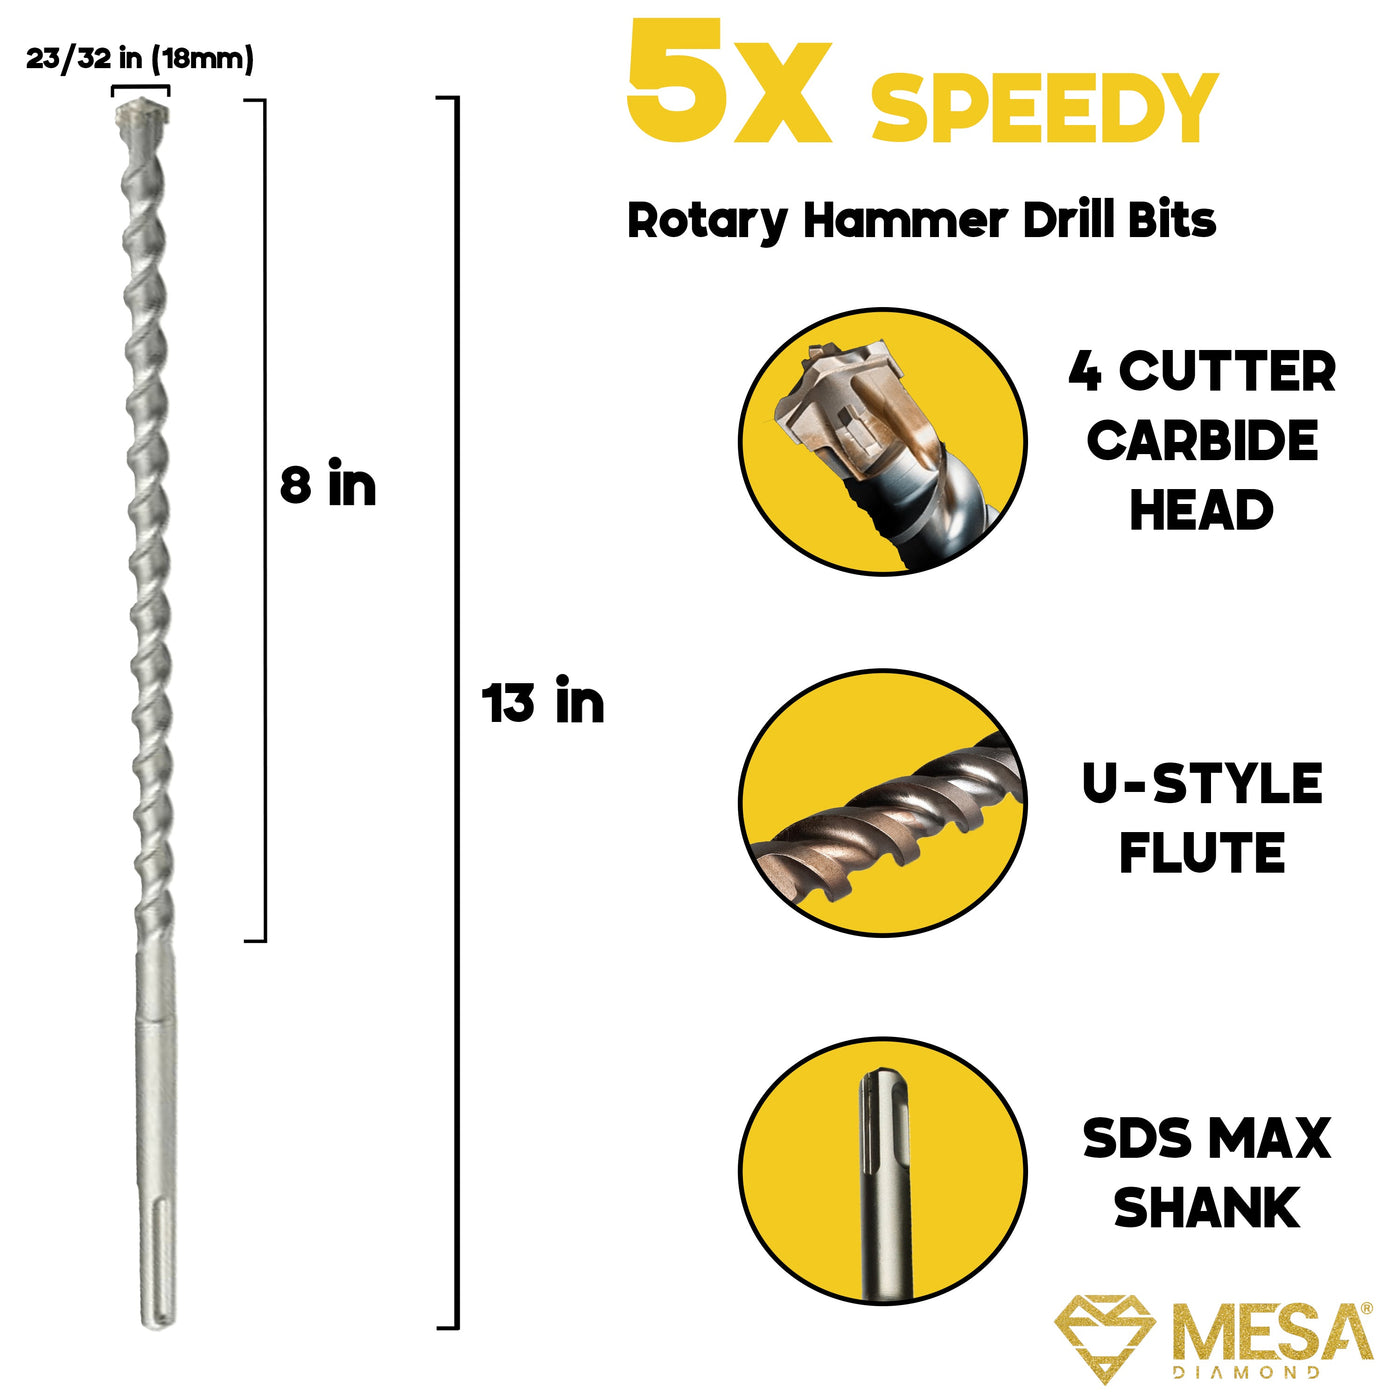 4 CUTTER SDS MAX Masonry Drill BitMESA DIAMOND®4SDSMAX181323/32 in (18mm)23/32 in (18mm)13 in